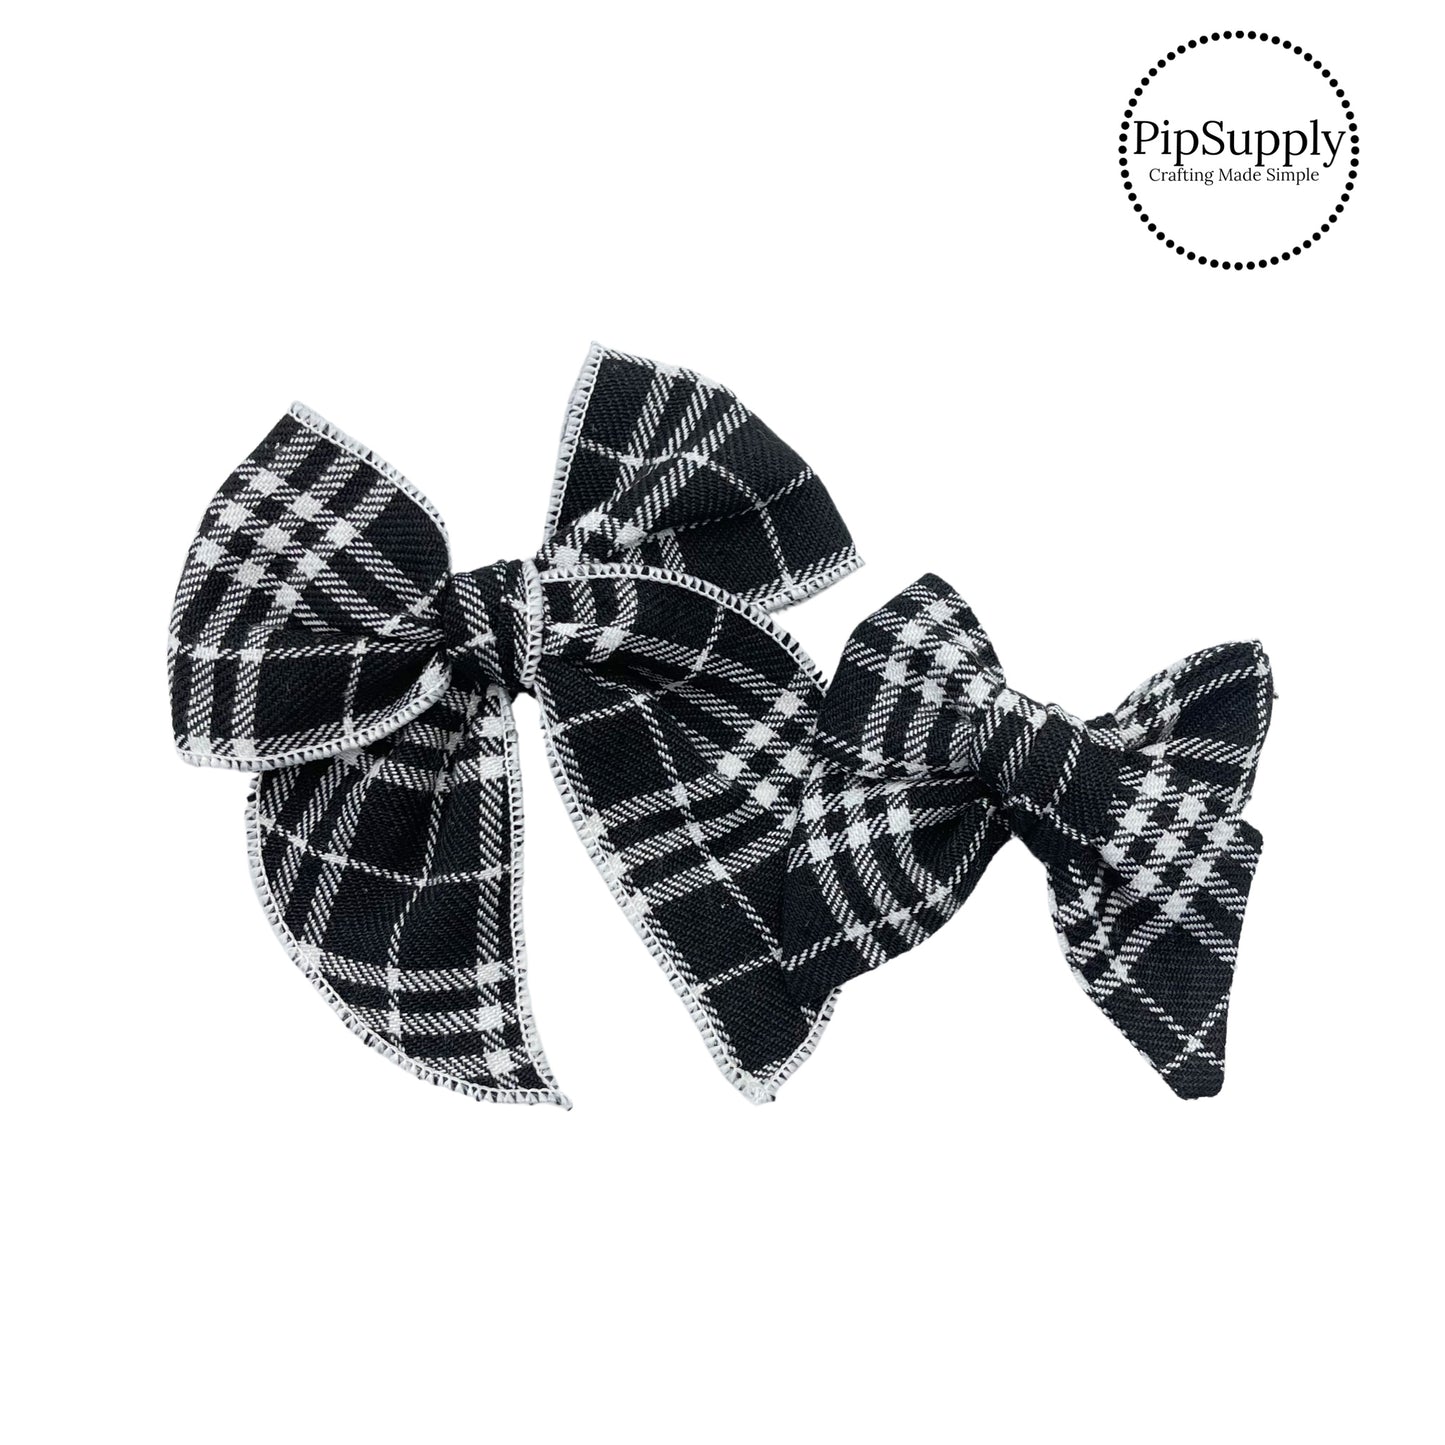 Black and white plaid woven hair bow strips